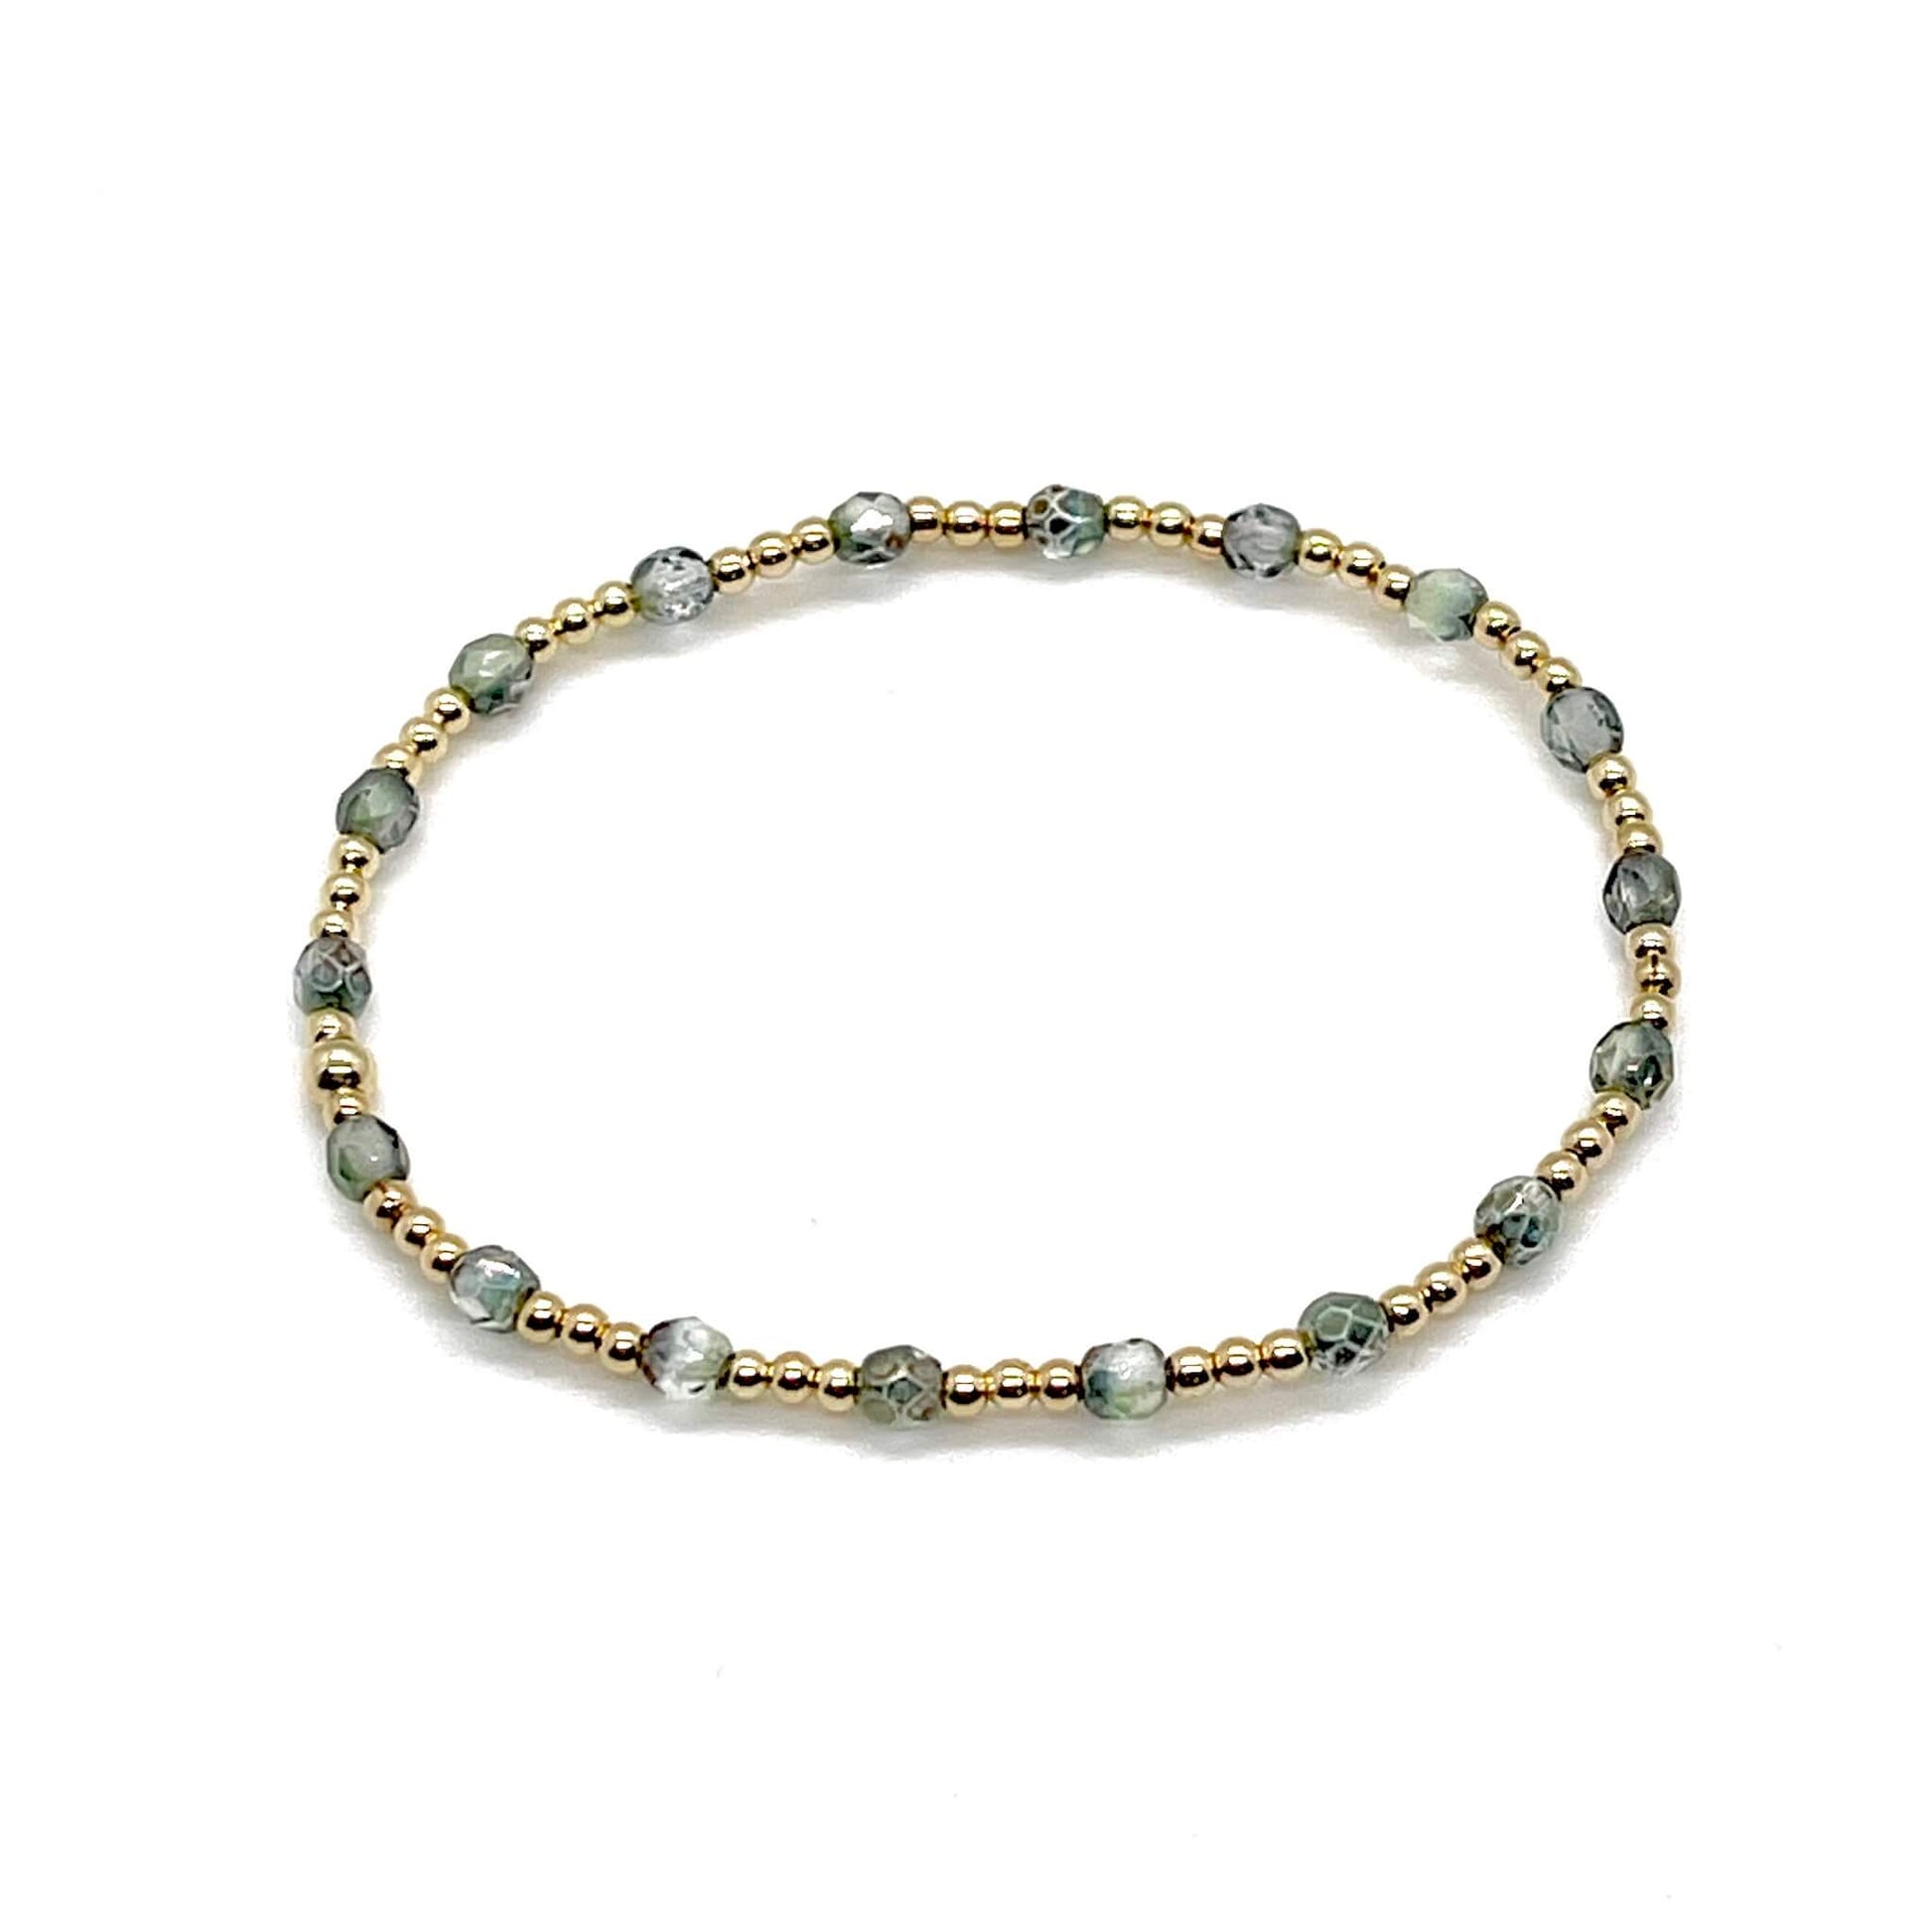 Green-grey crystal bracelet with waterproof, tarnish-resistant gold filled beads. Dainty handmade womens stretch bracelet.